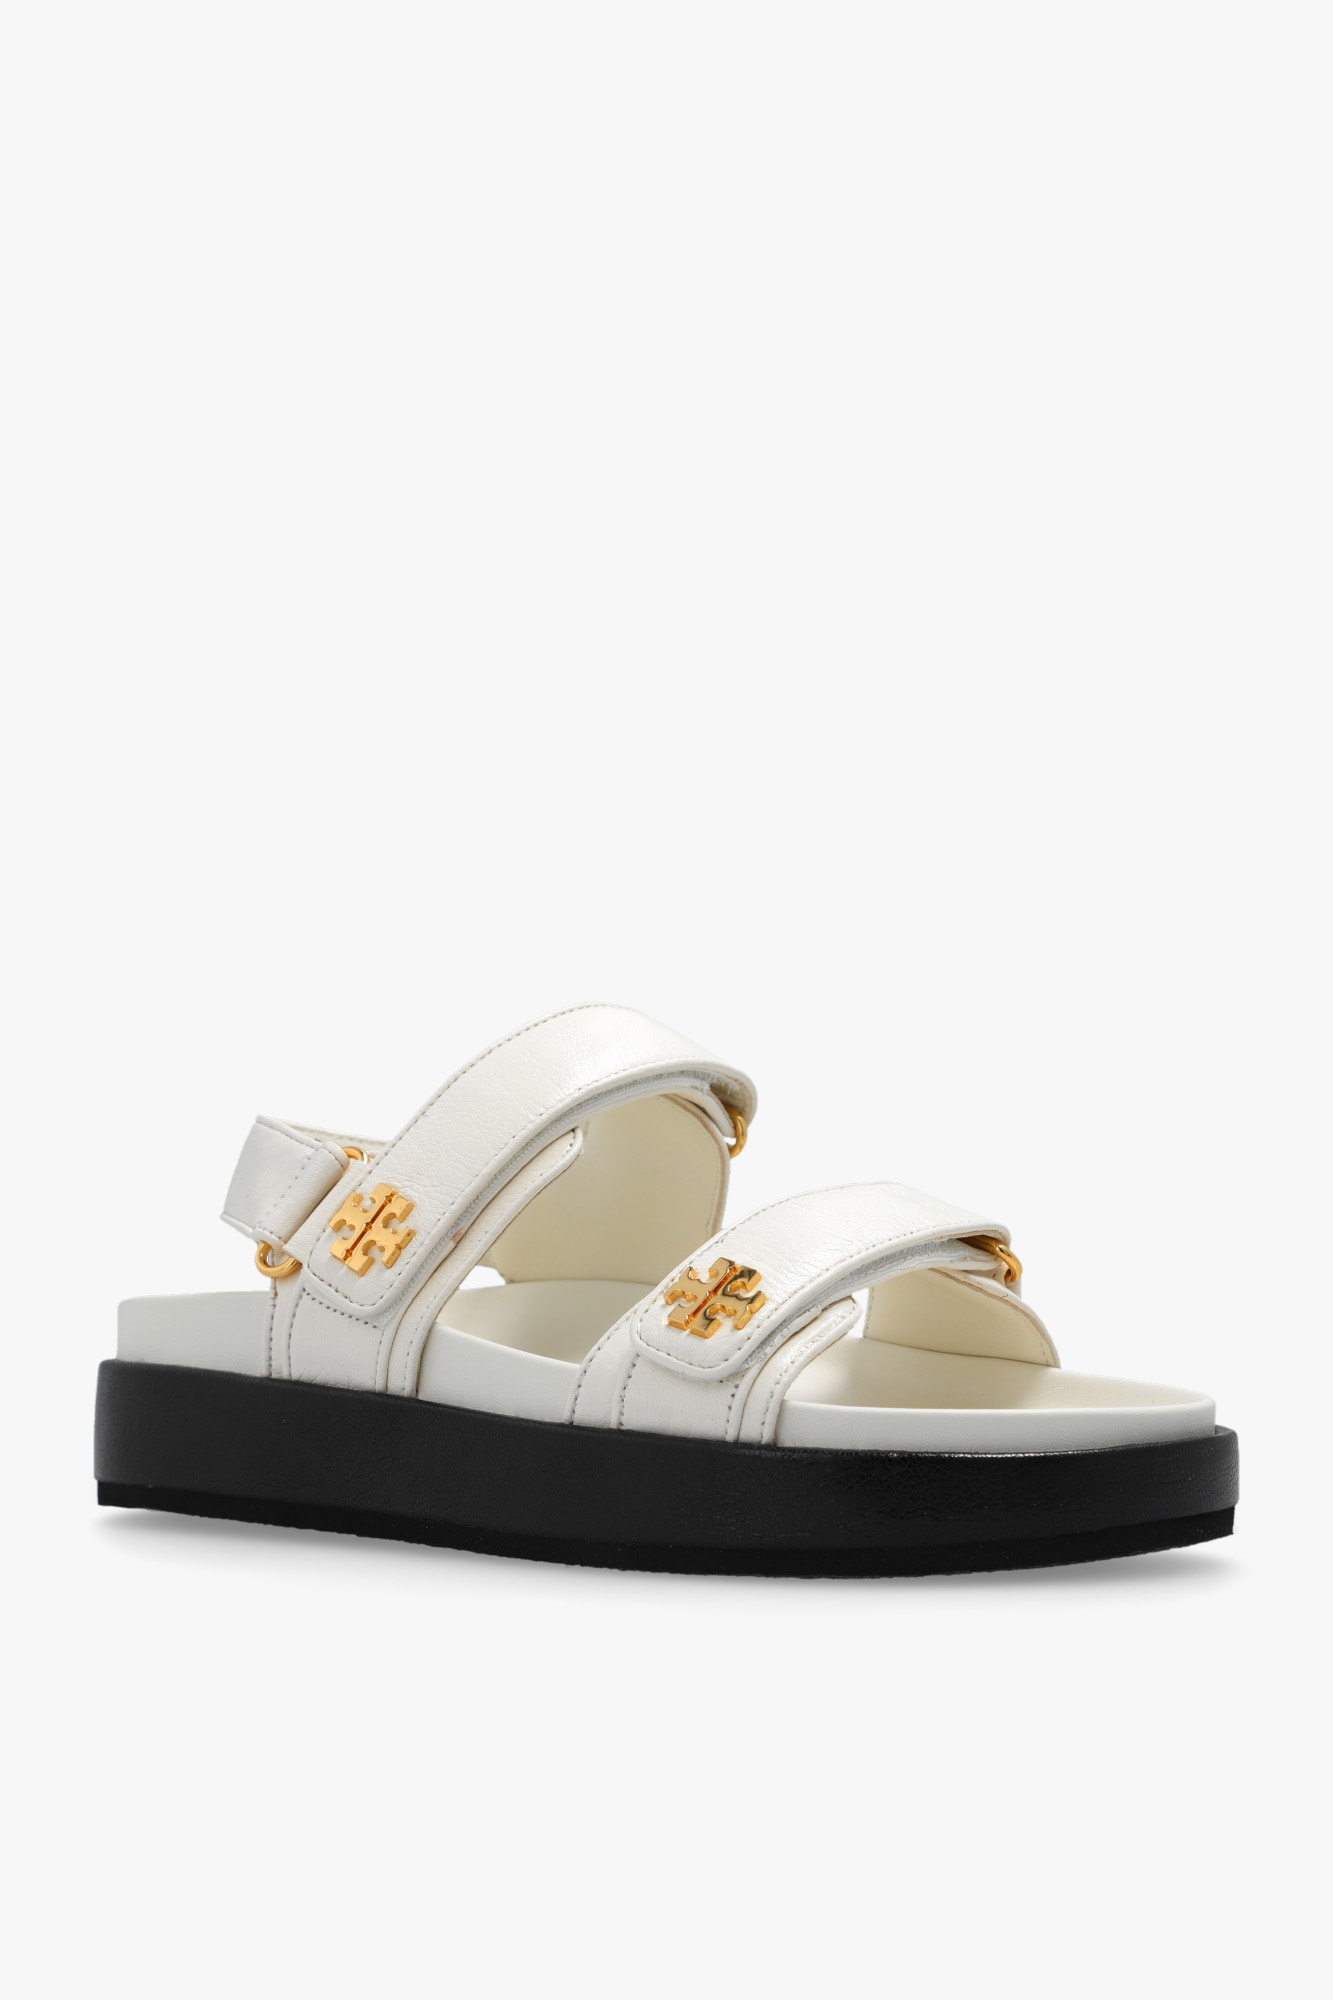 Tory Burch ‘Kira’ sandals